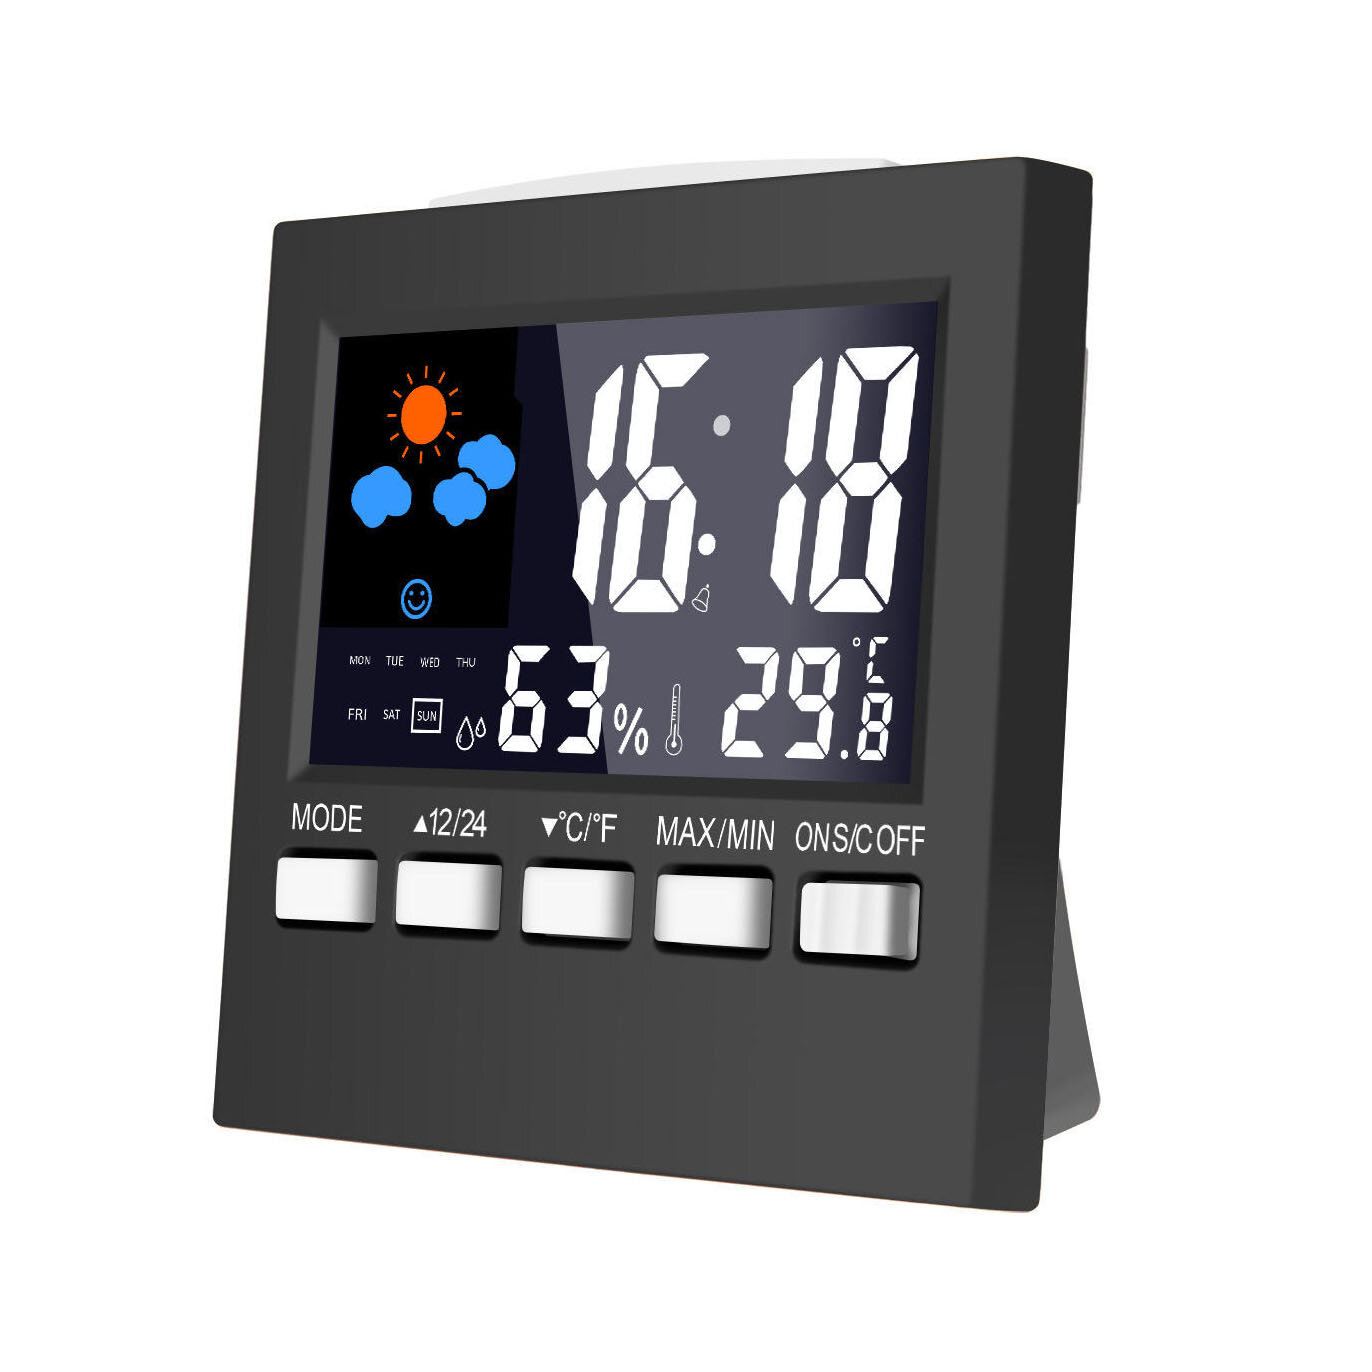 

DC-001 Digital Temperature Humidity Alarm Clocks LCD Weather Station Display Clock